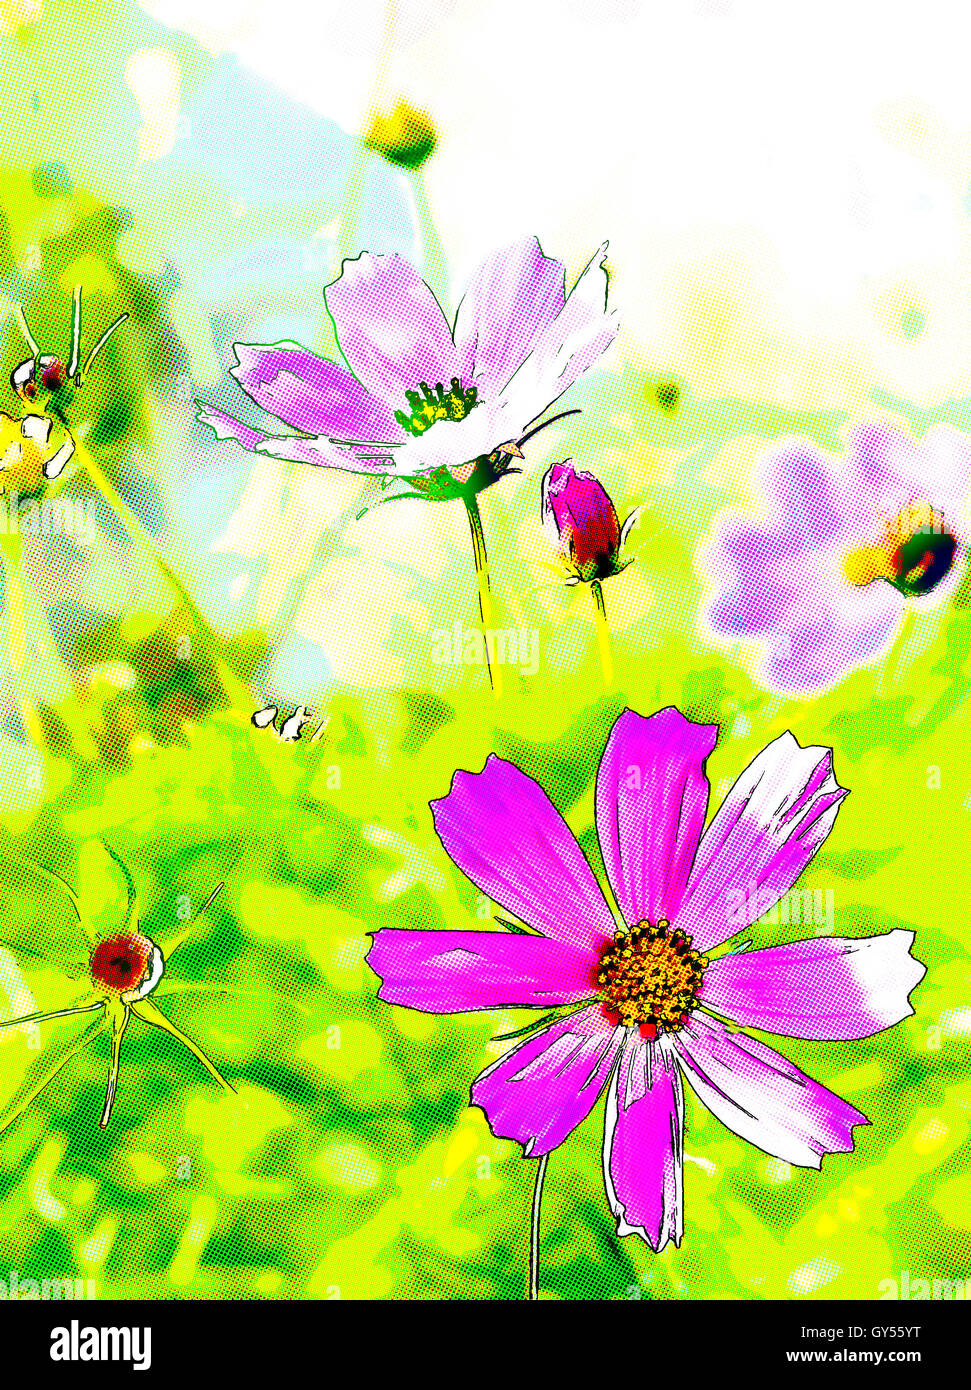 garden cosmos flowers comic effect Stock Photo